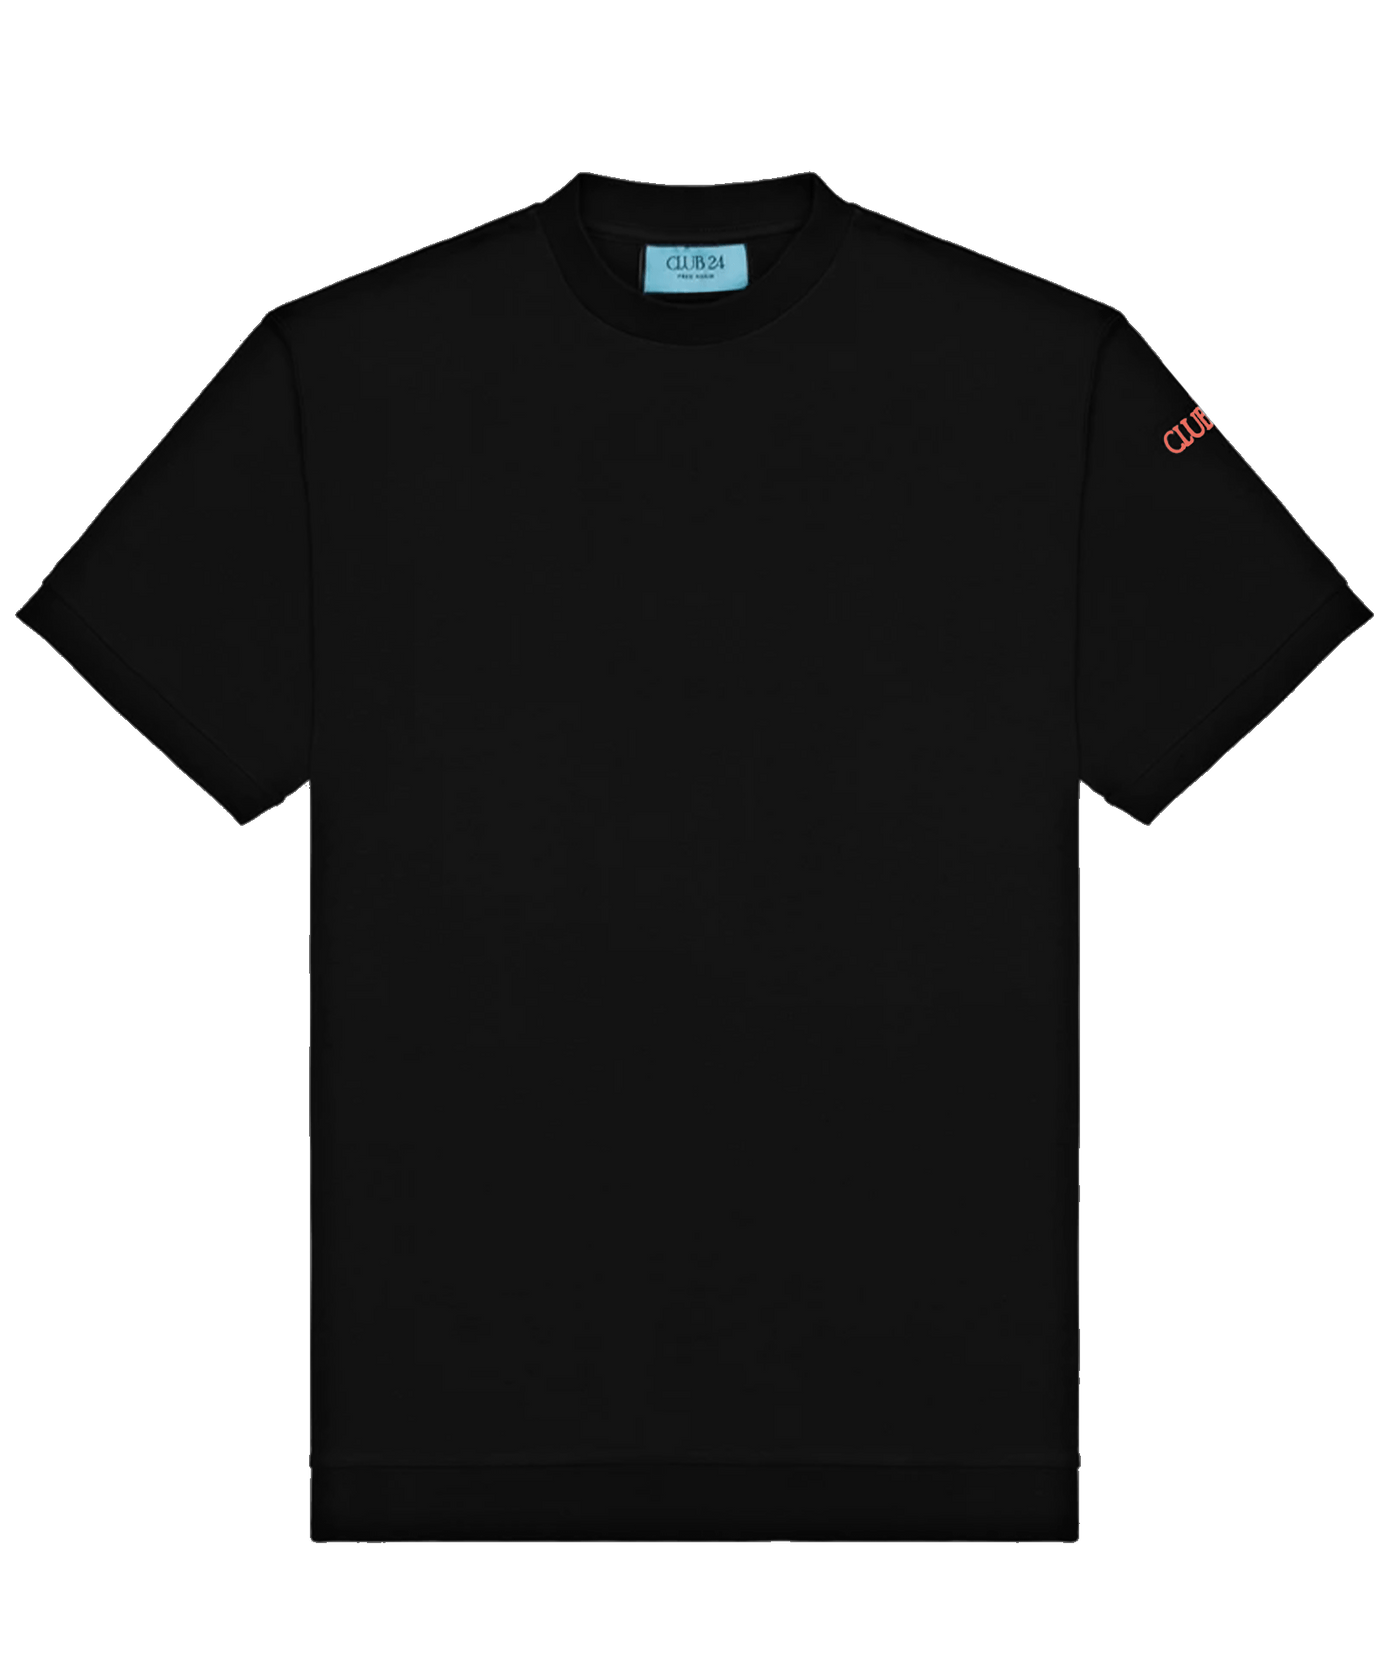 Club 24 - Freedom - T-shirt - Paint It Black